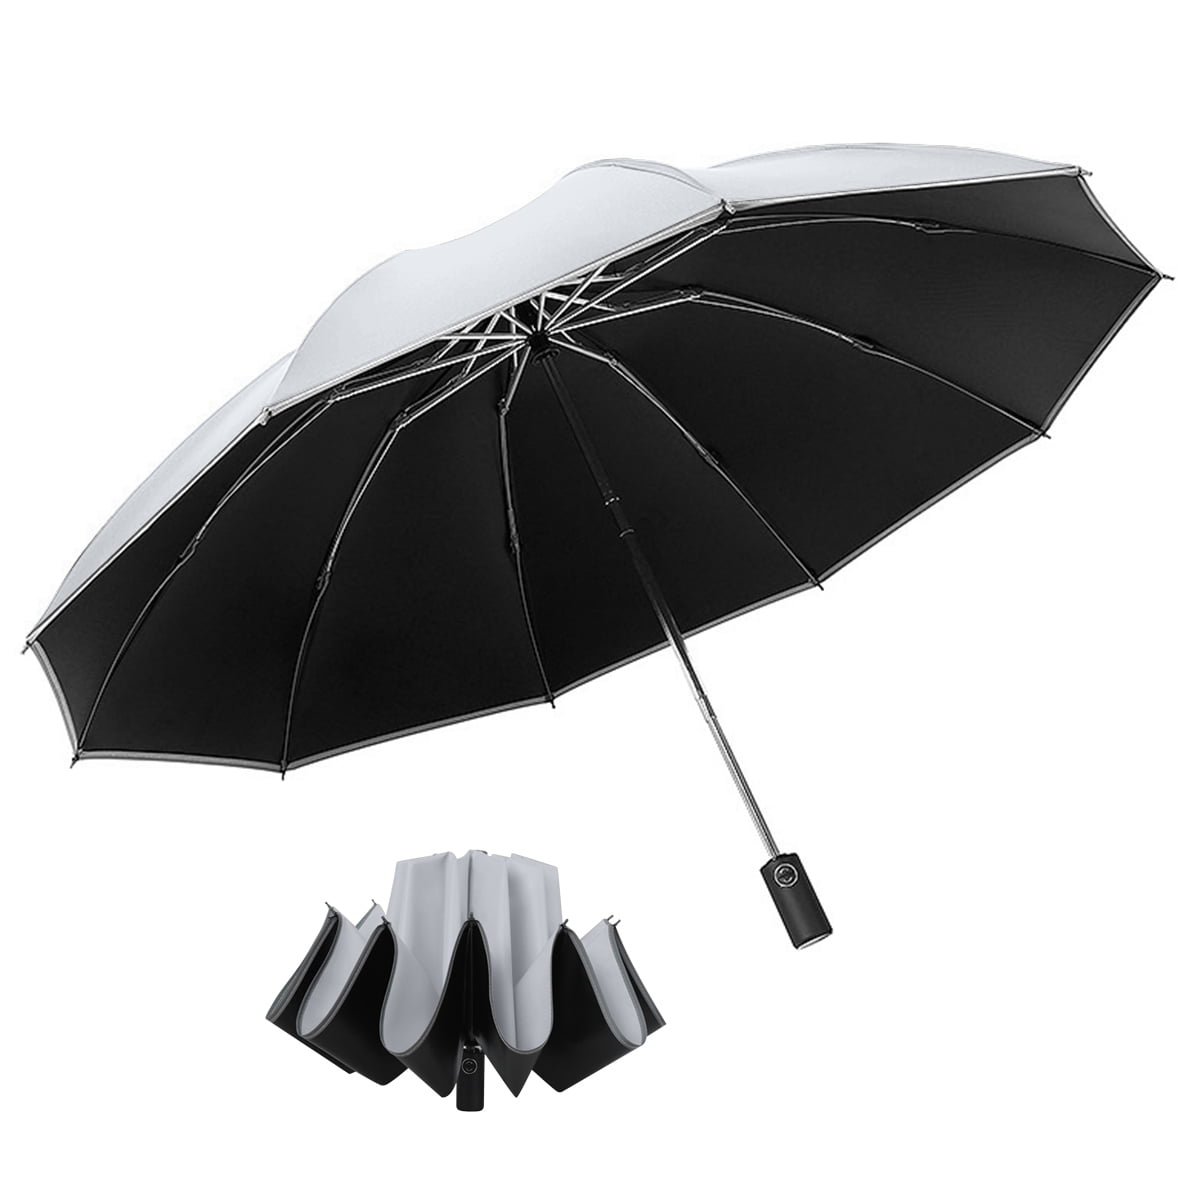 Windproof Travel Umbrella Auto Open Close Lightweight Sun&Rain Umbrella with Zipper Pouch Black 